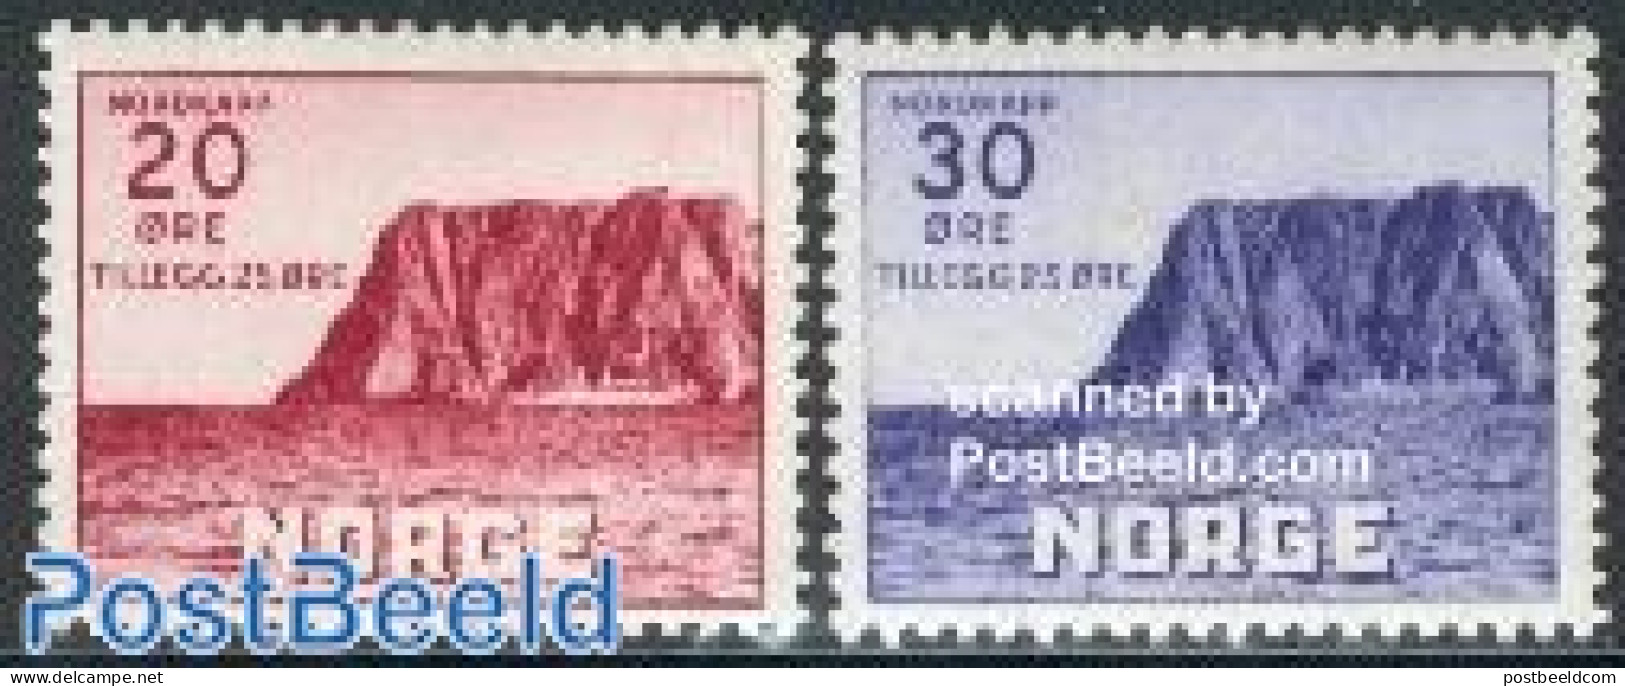 Norway 1938 Tourism 2v, Mint NH, Various - Tourism - Ongebruikt